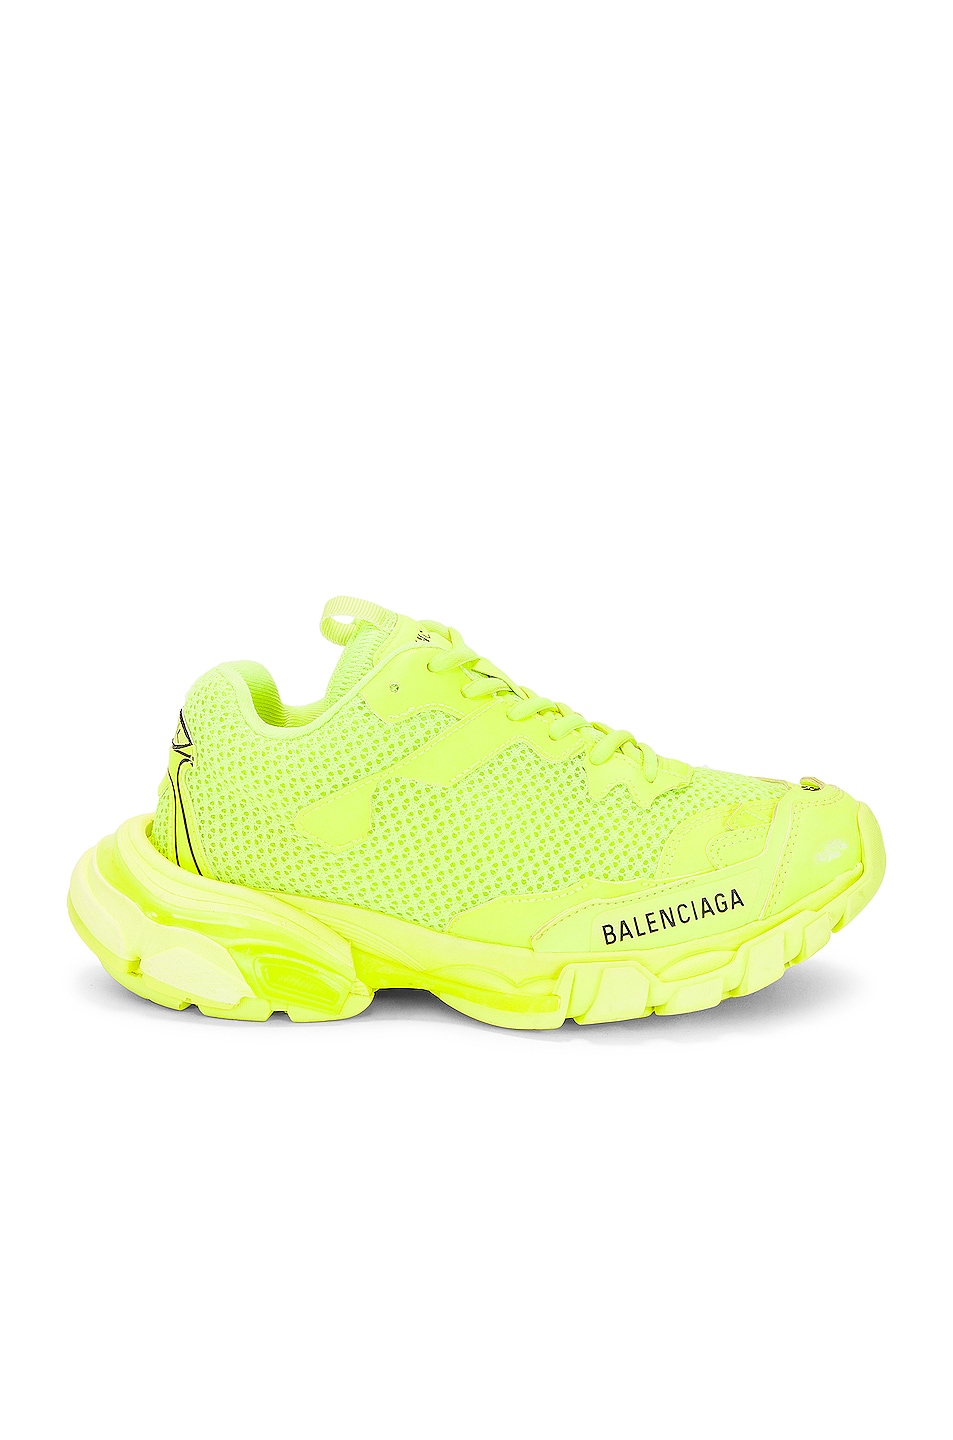 Balenciaga Track .3 Sneaker in Fluo Yellow & Black | FWRD